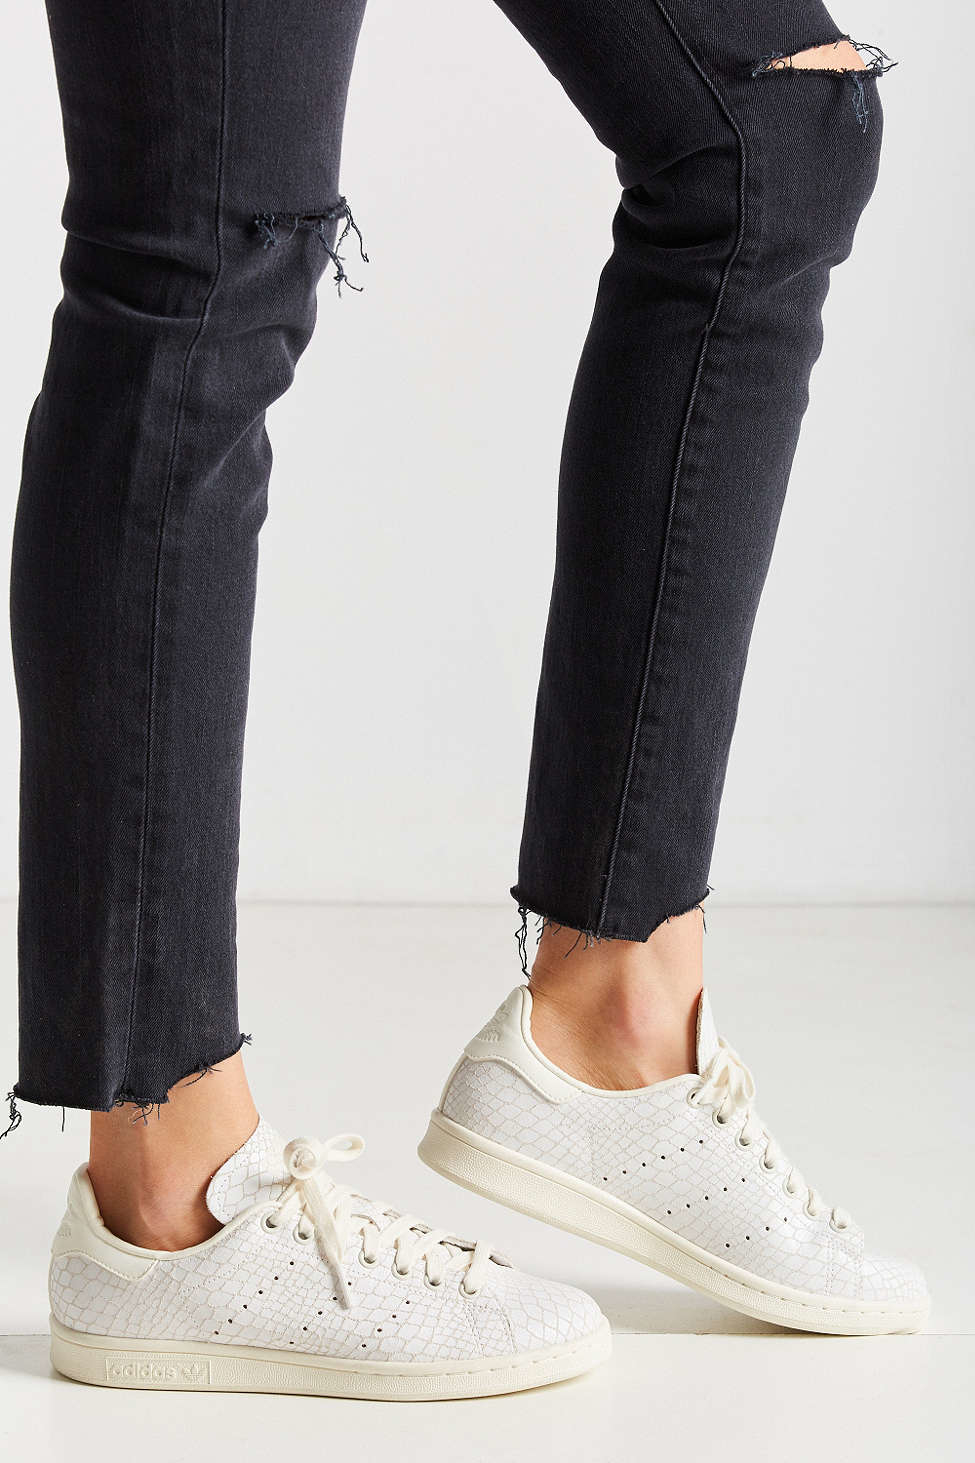 Paragraaf suiker Afstudeeralbum adidas Originals Stan Smith Croc-Embossed Leather Low-Top Sneakers in White  | Lyst